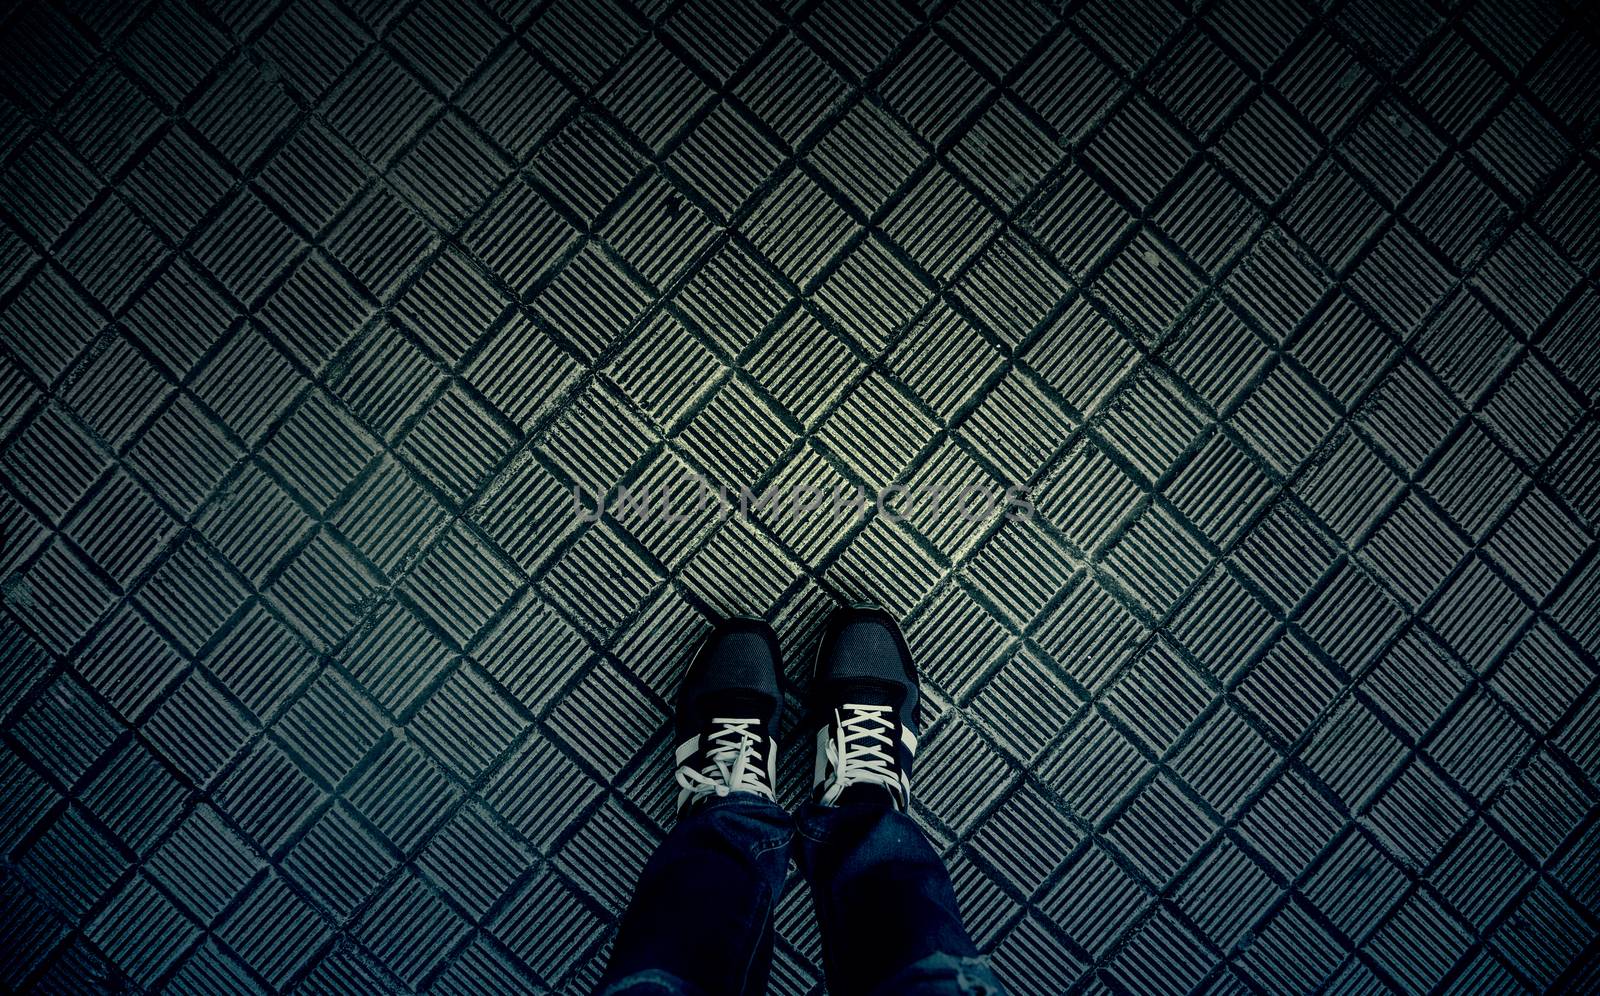 Feet with boots, urban fashion detail